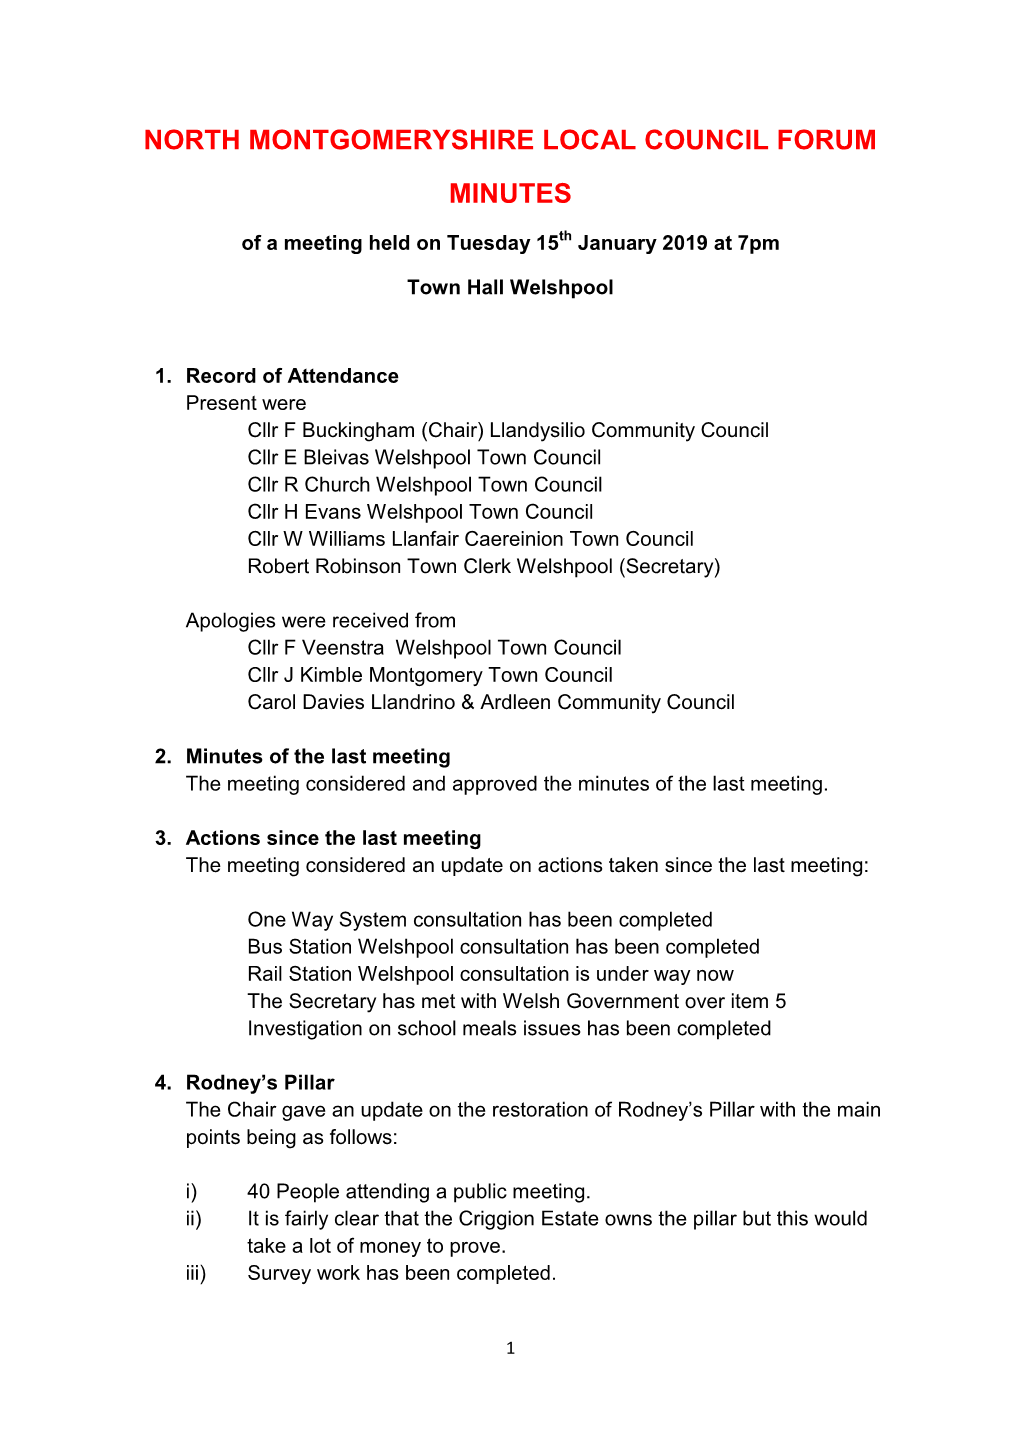 North Montgomeryshire Local Council Forum Minutes